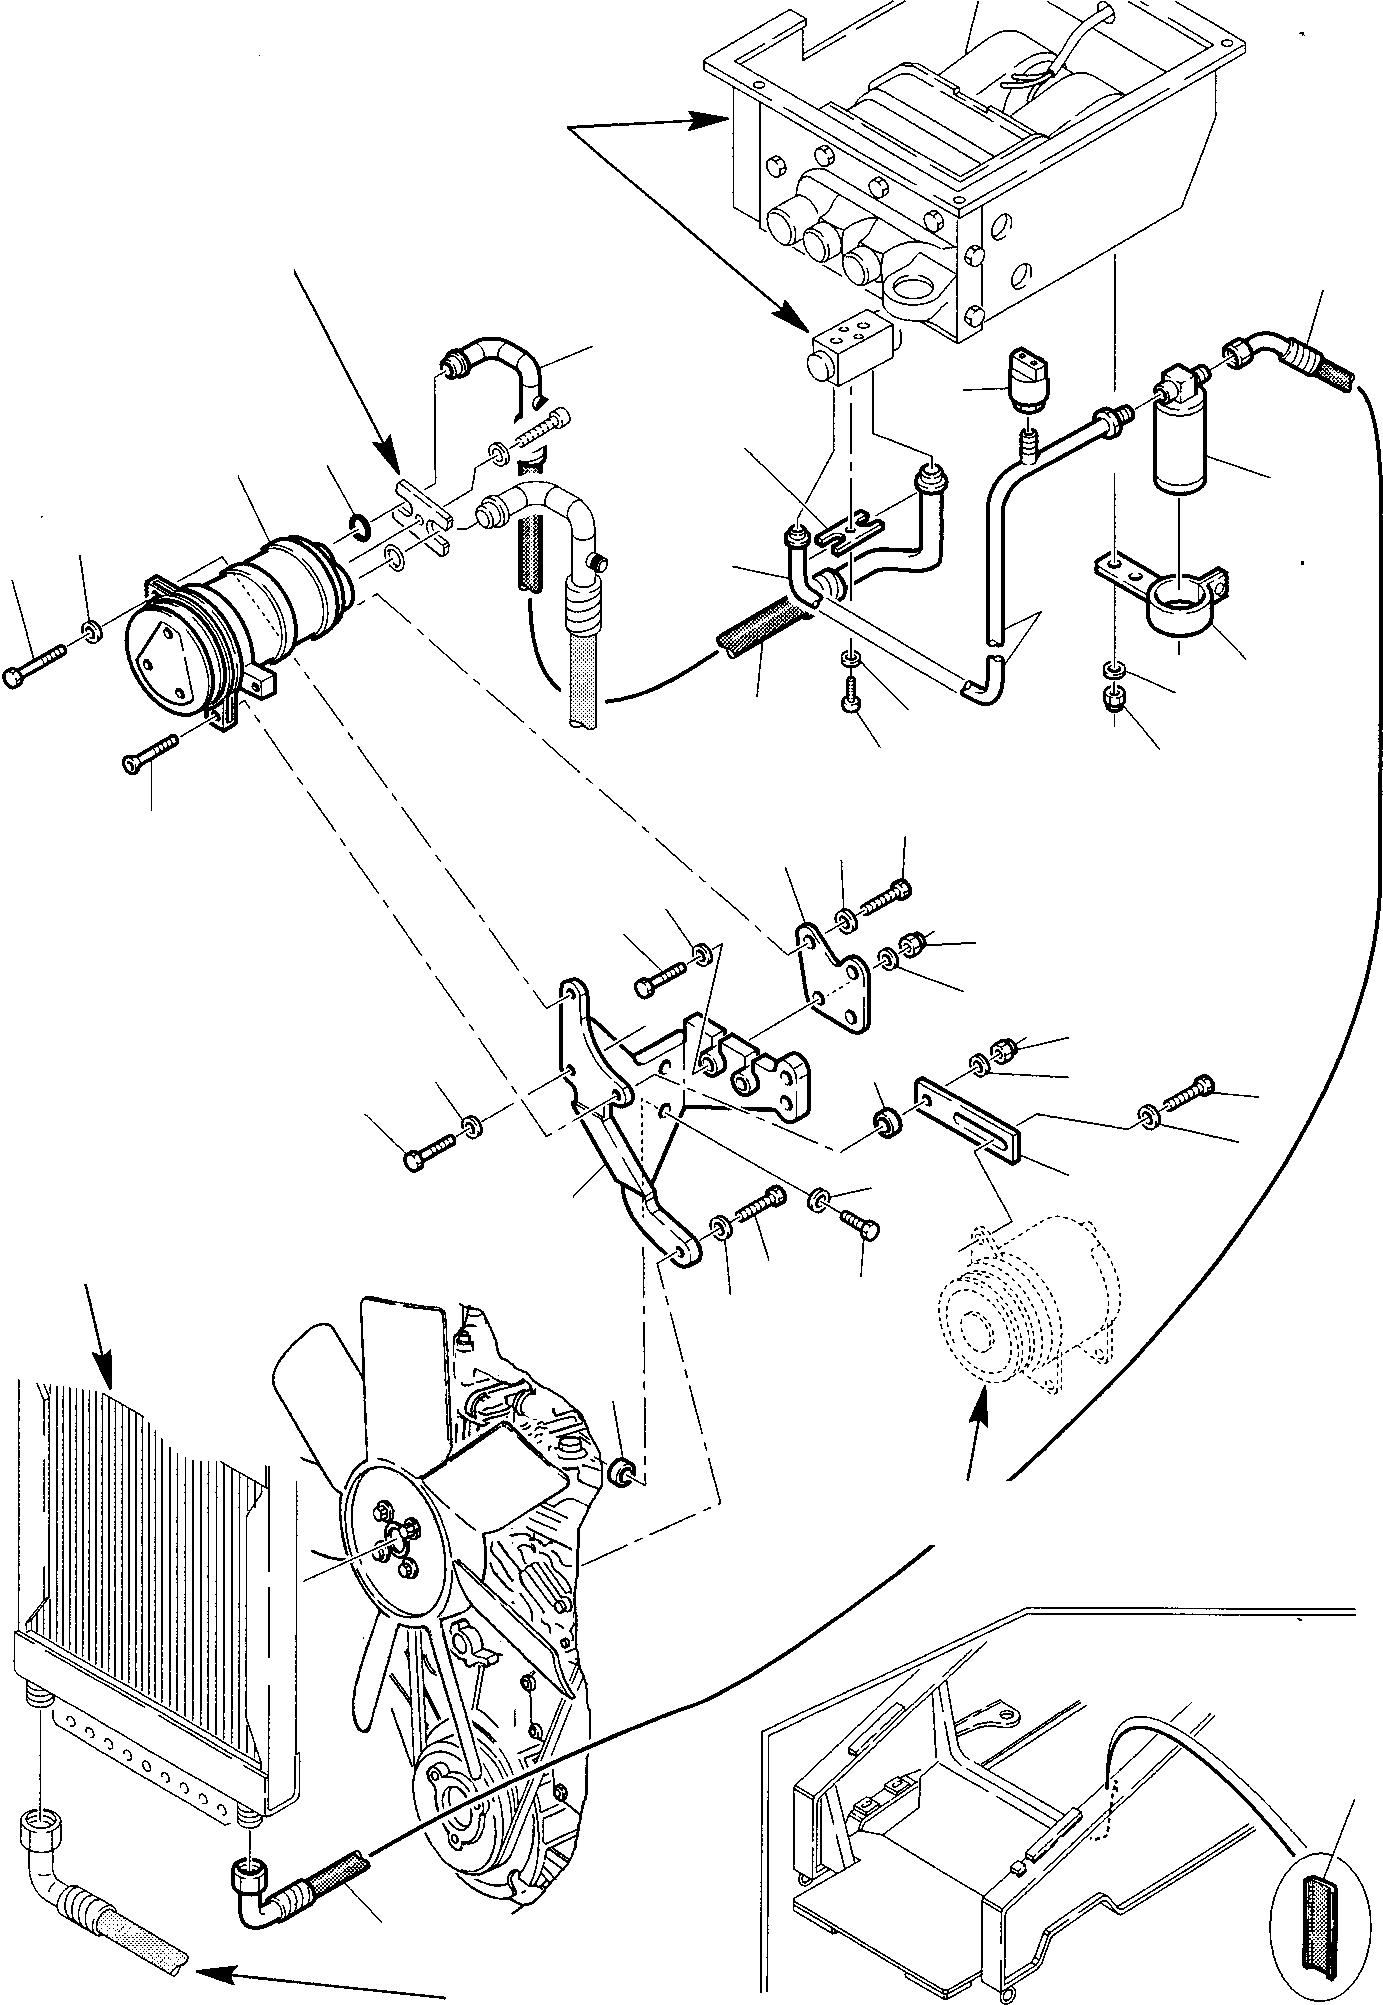 Part 24. MOTOR AIR BLENDING SYSTEM (2/2) [5930]